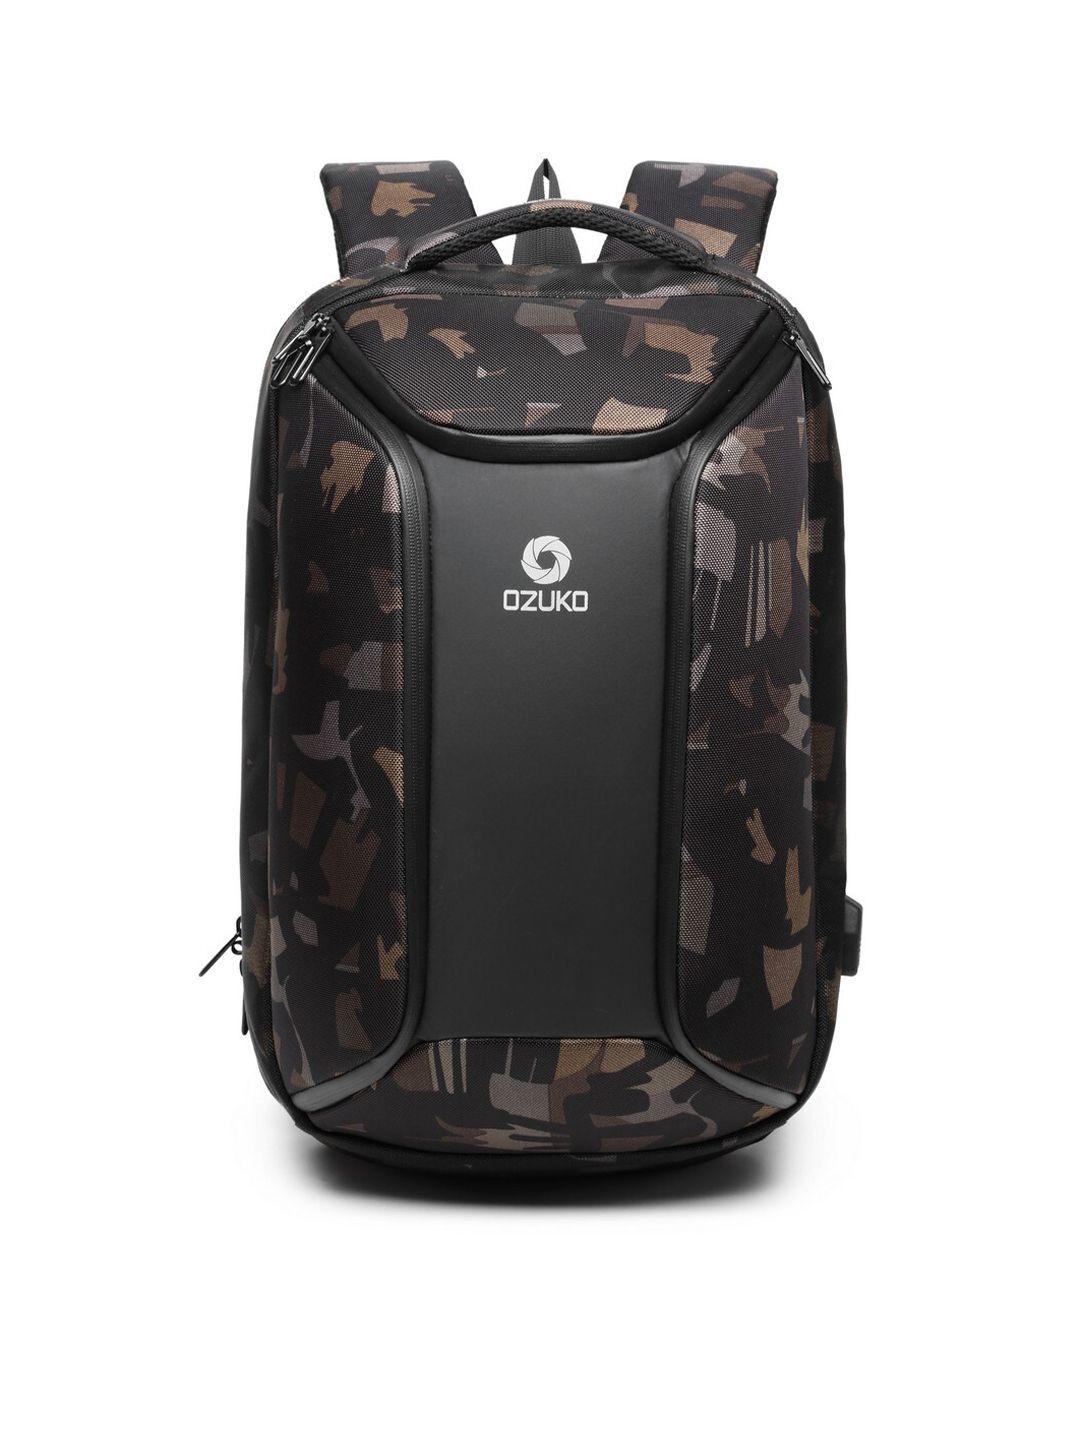 ozuko 9318 camo soft one size backpack